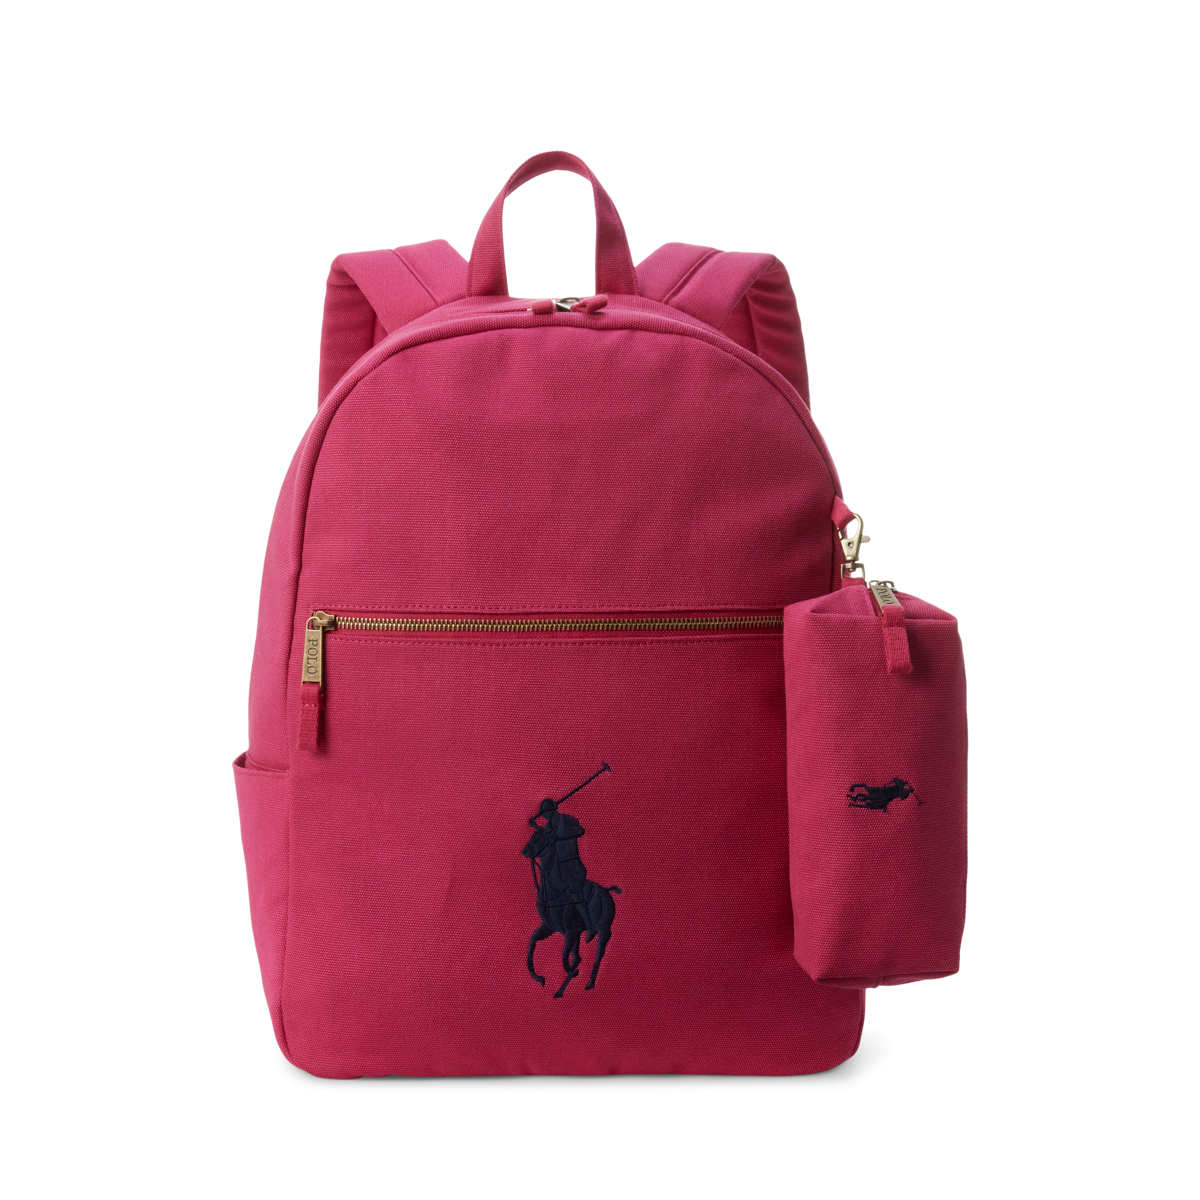 Polo Ralph Lauren Boys Pony Backpack - Newport Navy - Size Large